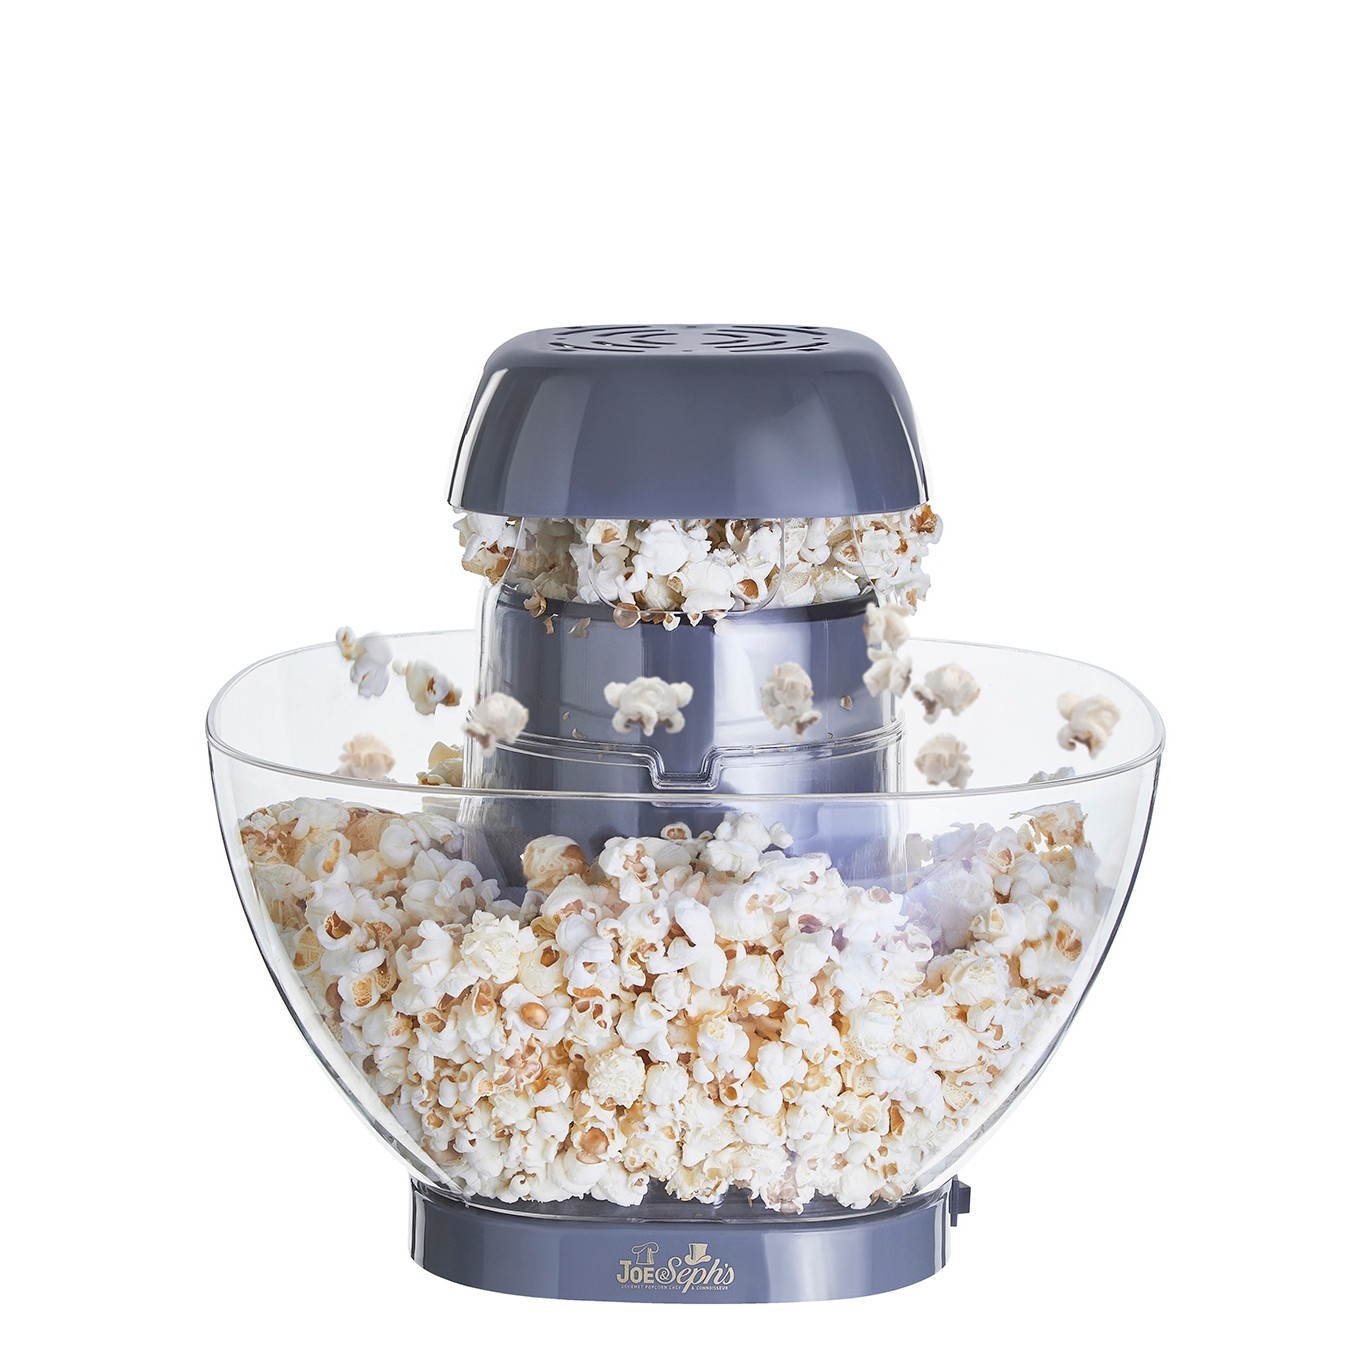 Joe & Seph's The Gourmet Popcorn Maker